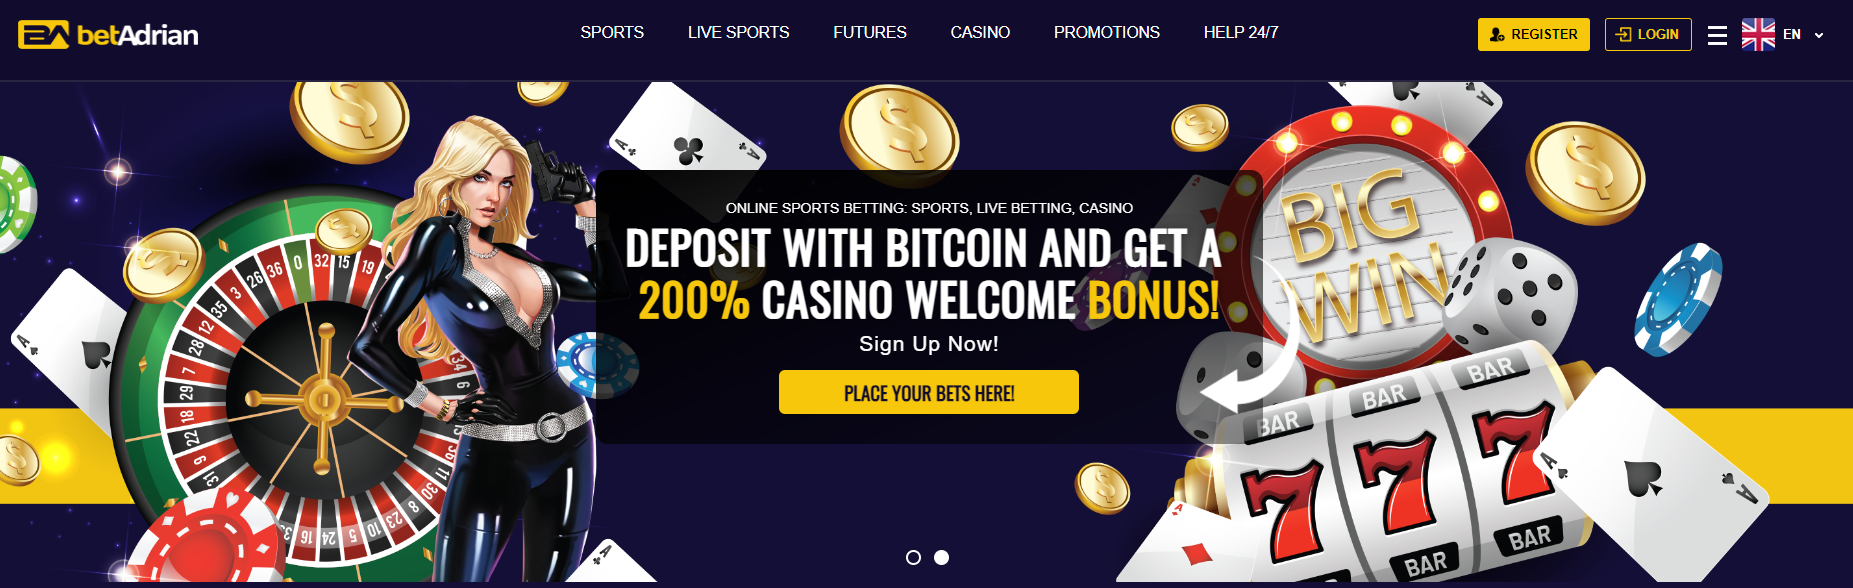 online bitcoin casinos - The Six Figure Challenge